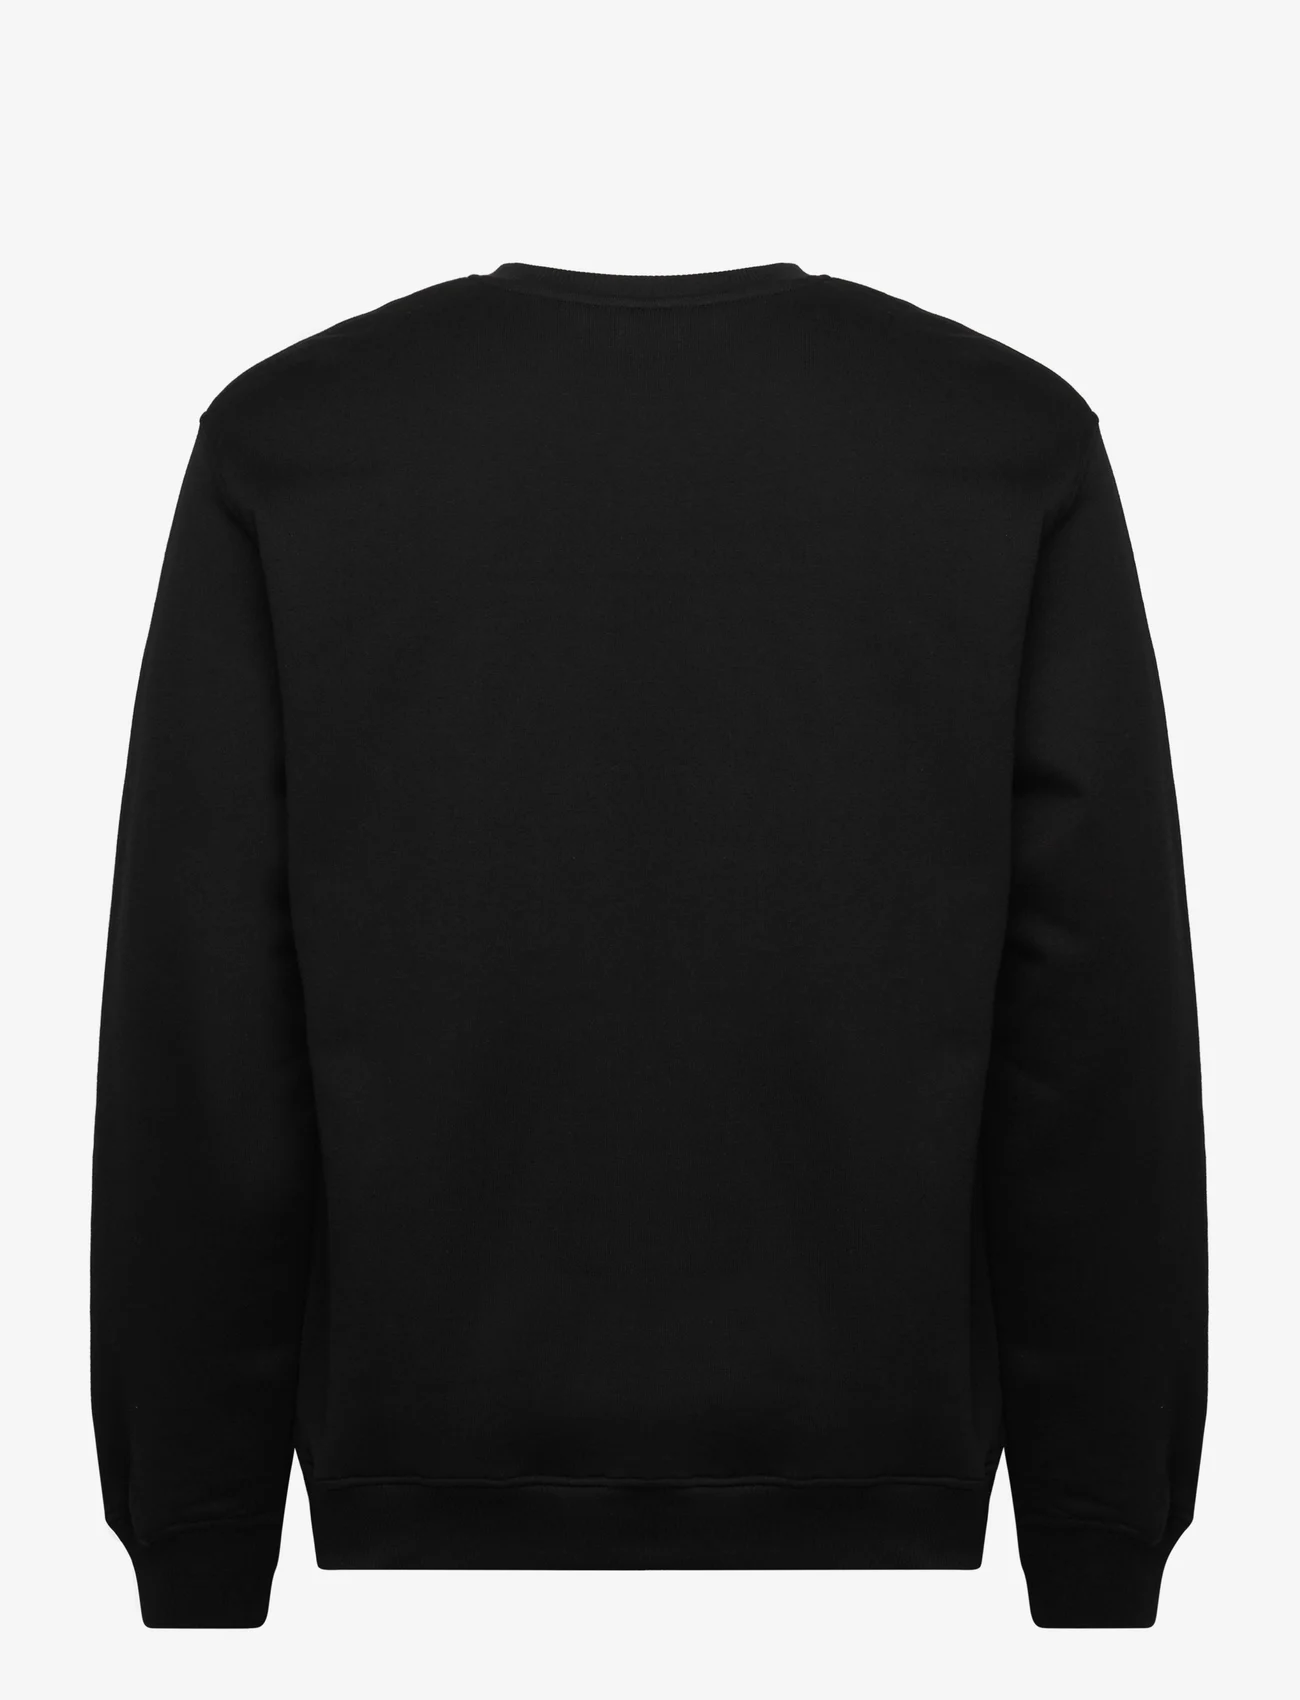 MessyWeekend - SWEATSHIRT SS23 - sweatshirts - black - 1